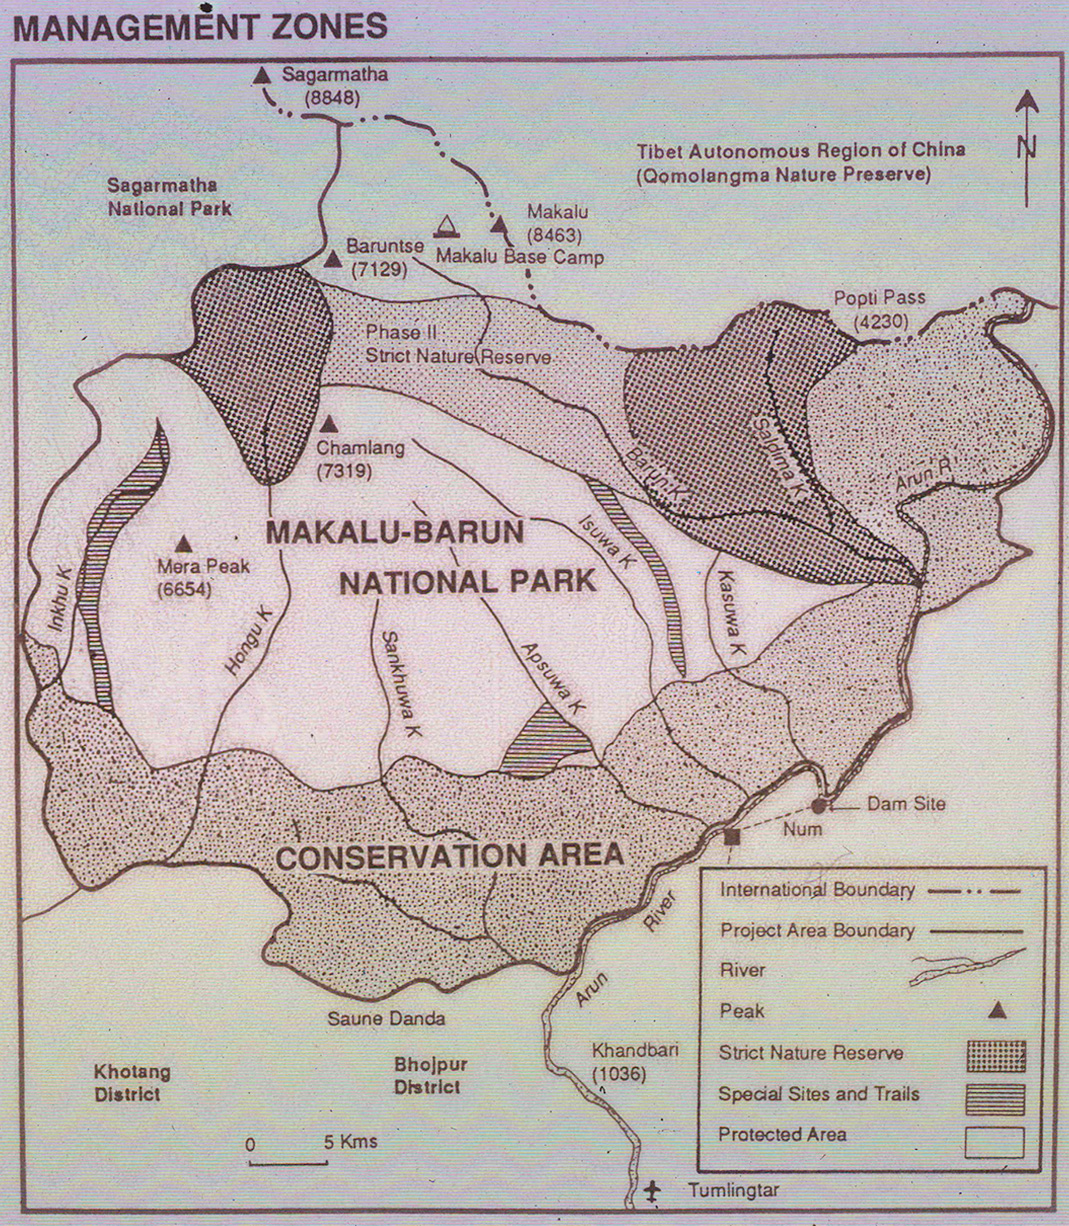 MakaluBarun National Park